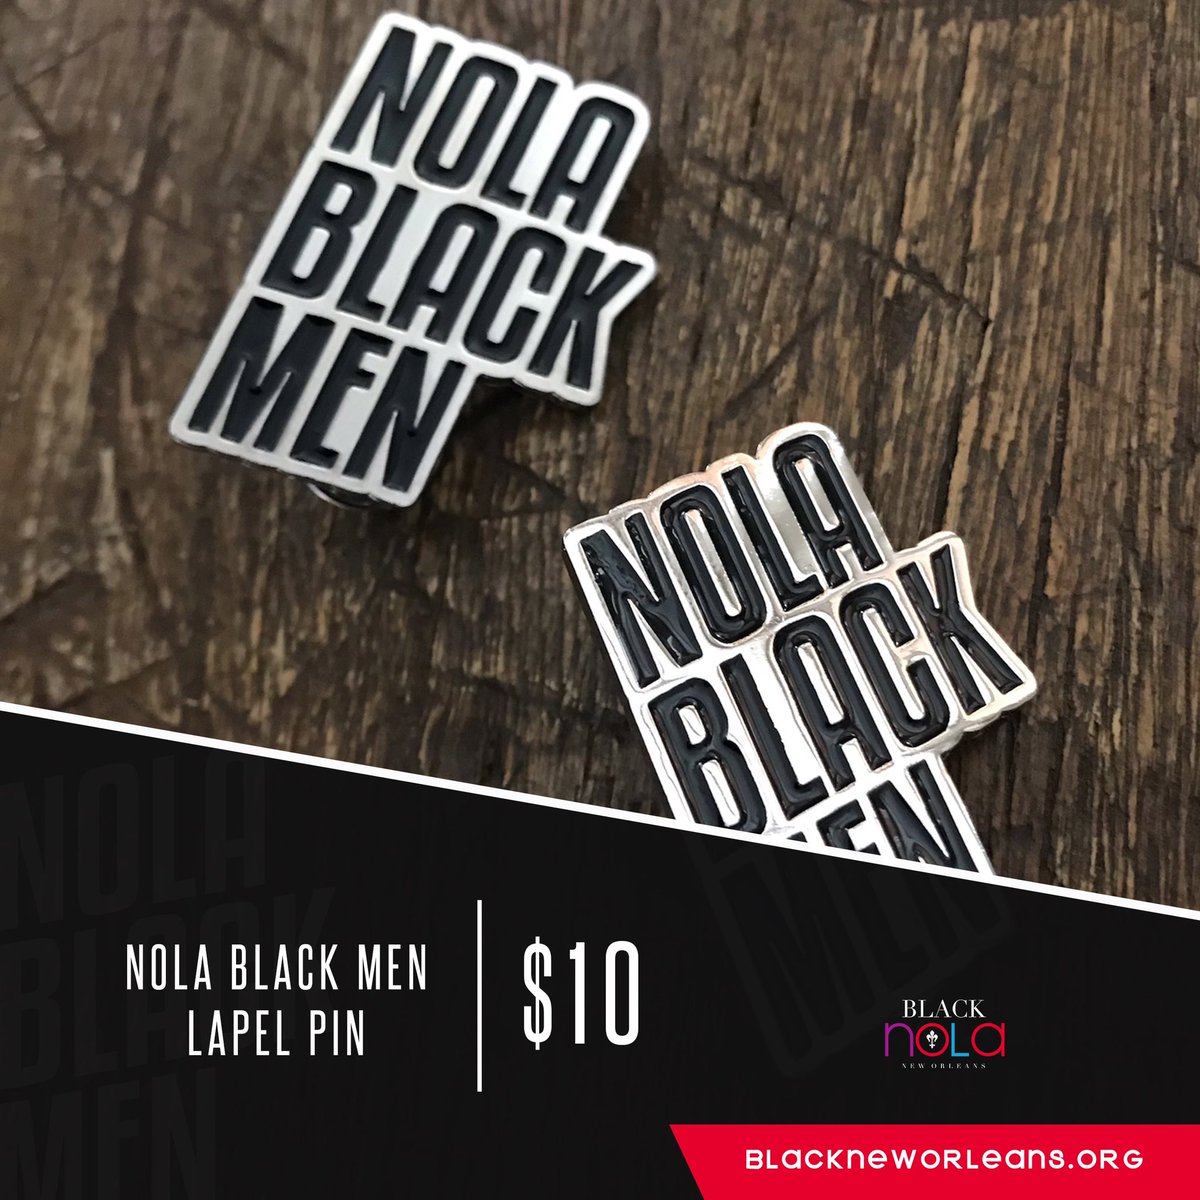 NOW AVAILABLE - NOLA BLACK MEN LAPEL PIN | $10 
blackneworleans.org

#LiveLikeTheLocals #NOLABlackDollars #nolablackbusiness #neworleansblackbusiness #neworleansblackbusinesses #NewOrleansBlogger #NewOrleans #BlackNewOrleans #BlackNOLA @blacknola